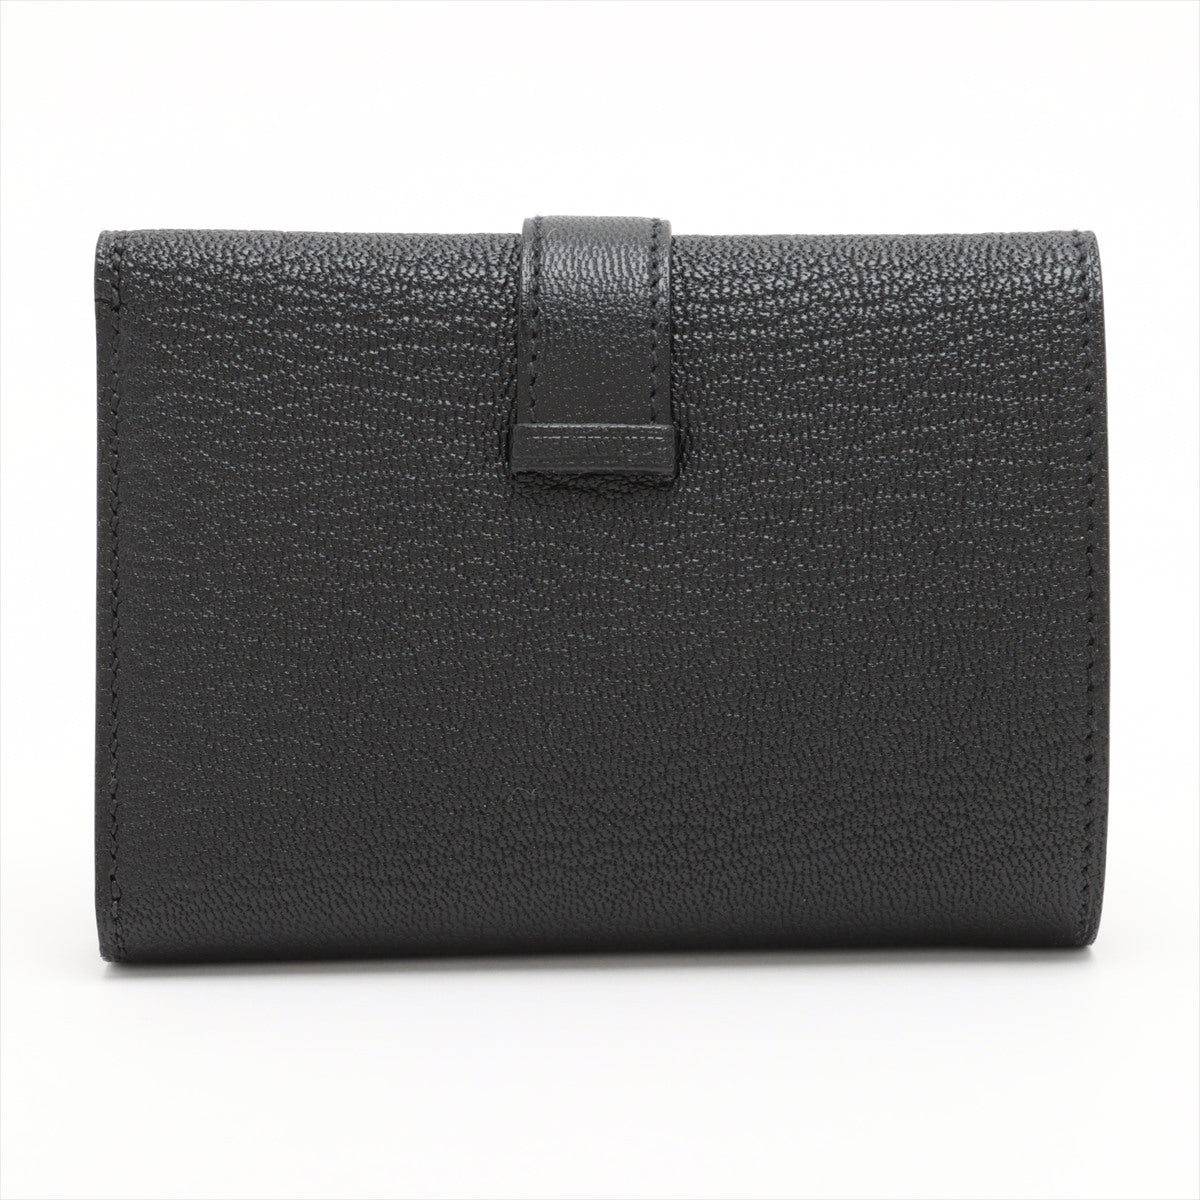 Hermès Bearn Combiné Chevre myzore Compact Wallet Black Silver Metal fittings B: 2023